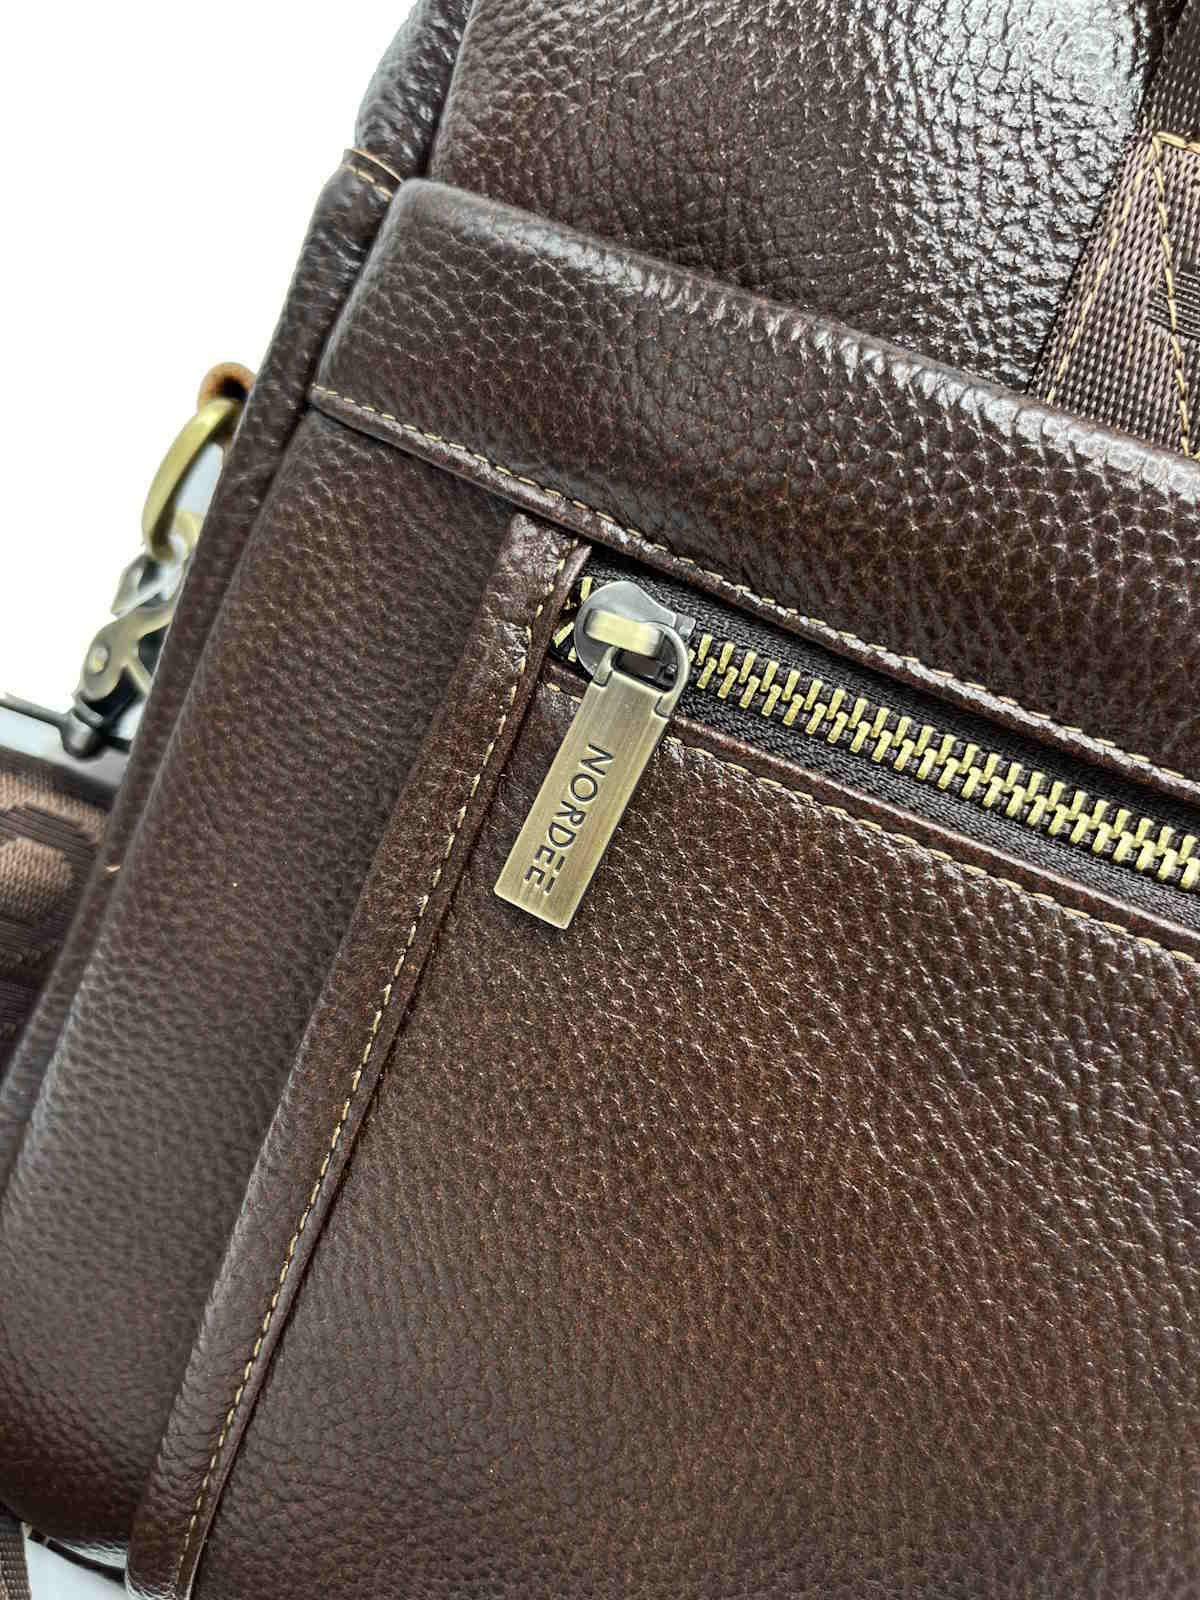 Genuine leather briefcase, Brand Nordee, art. S137